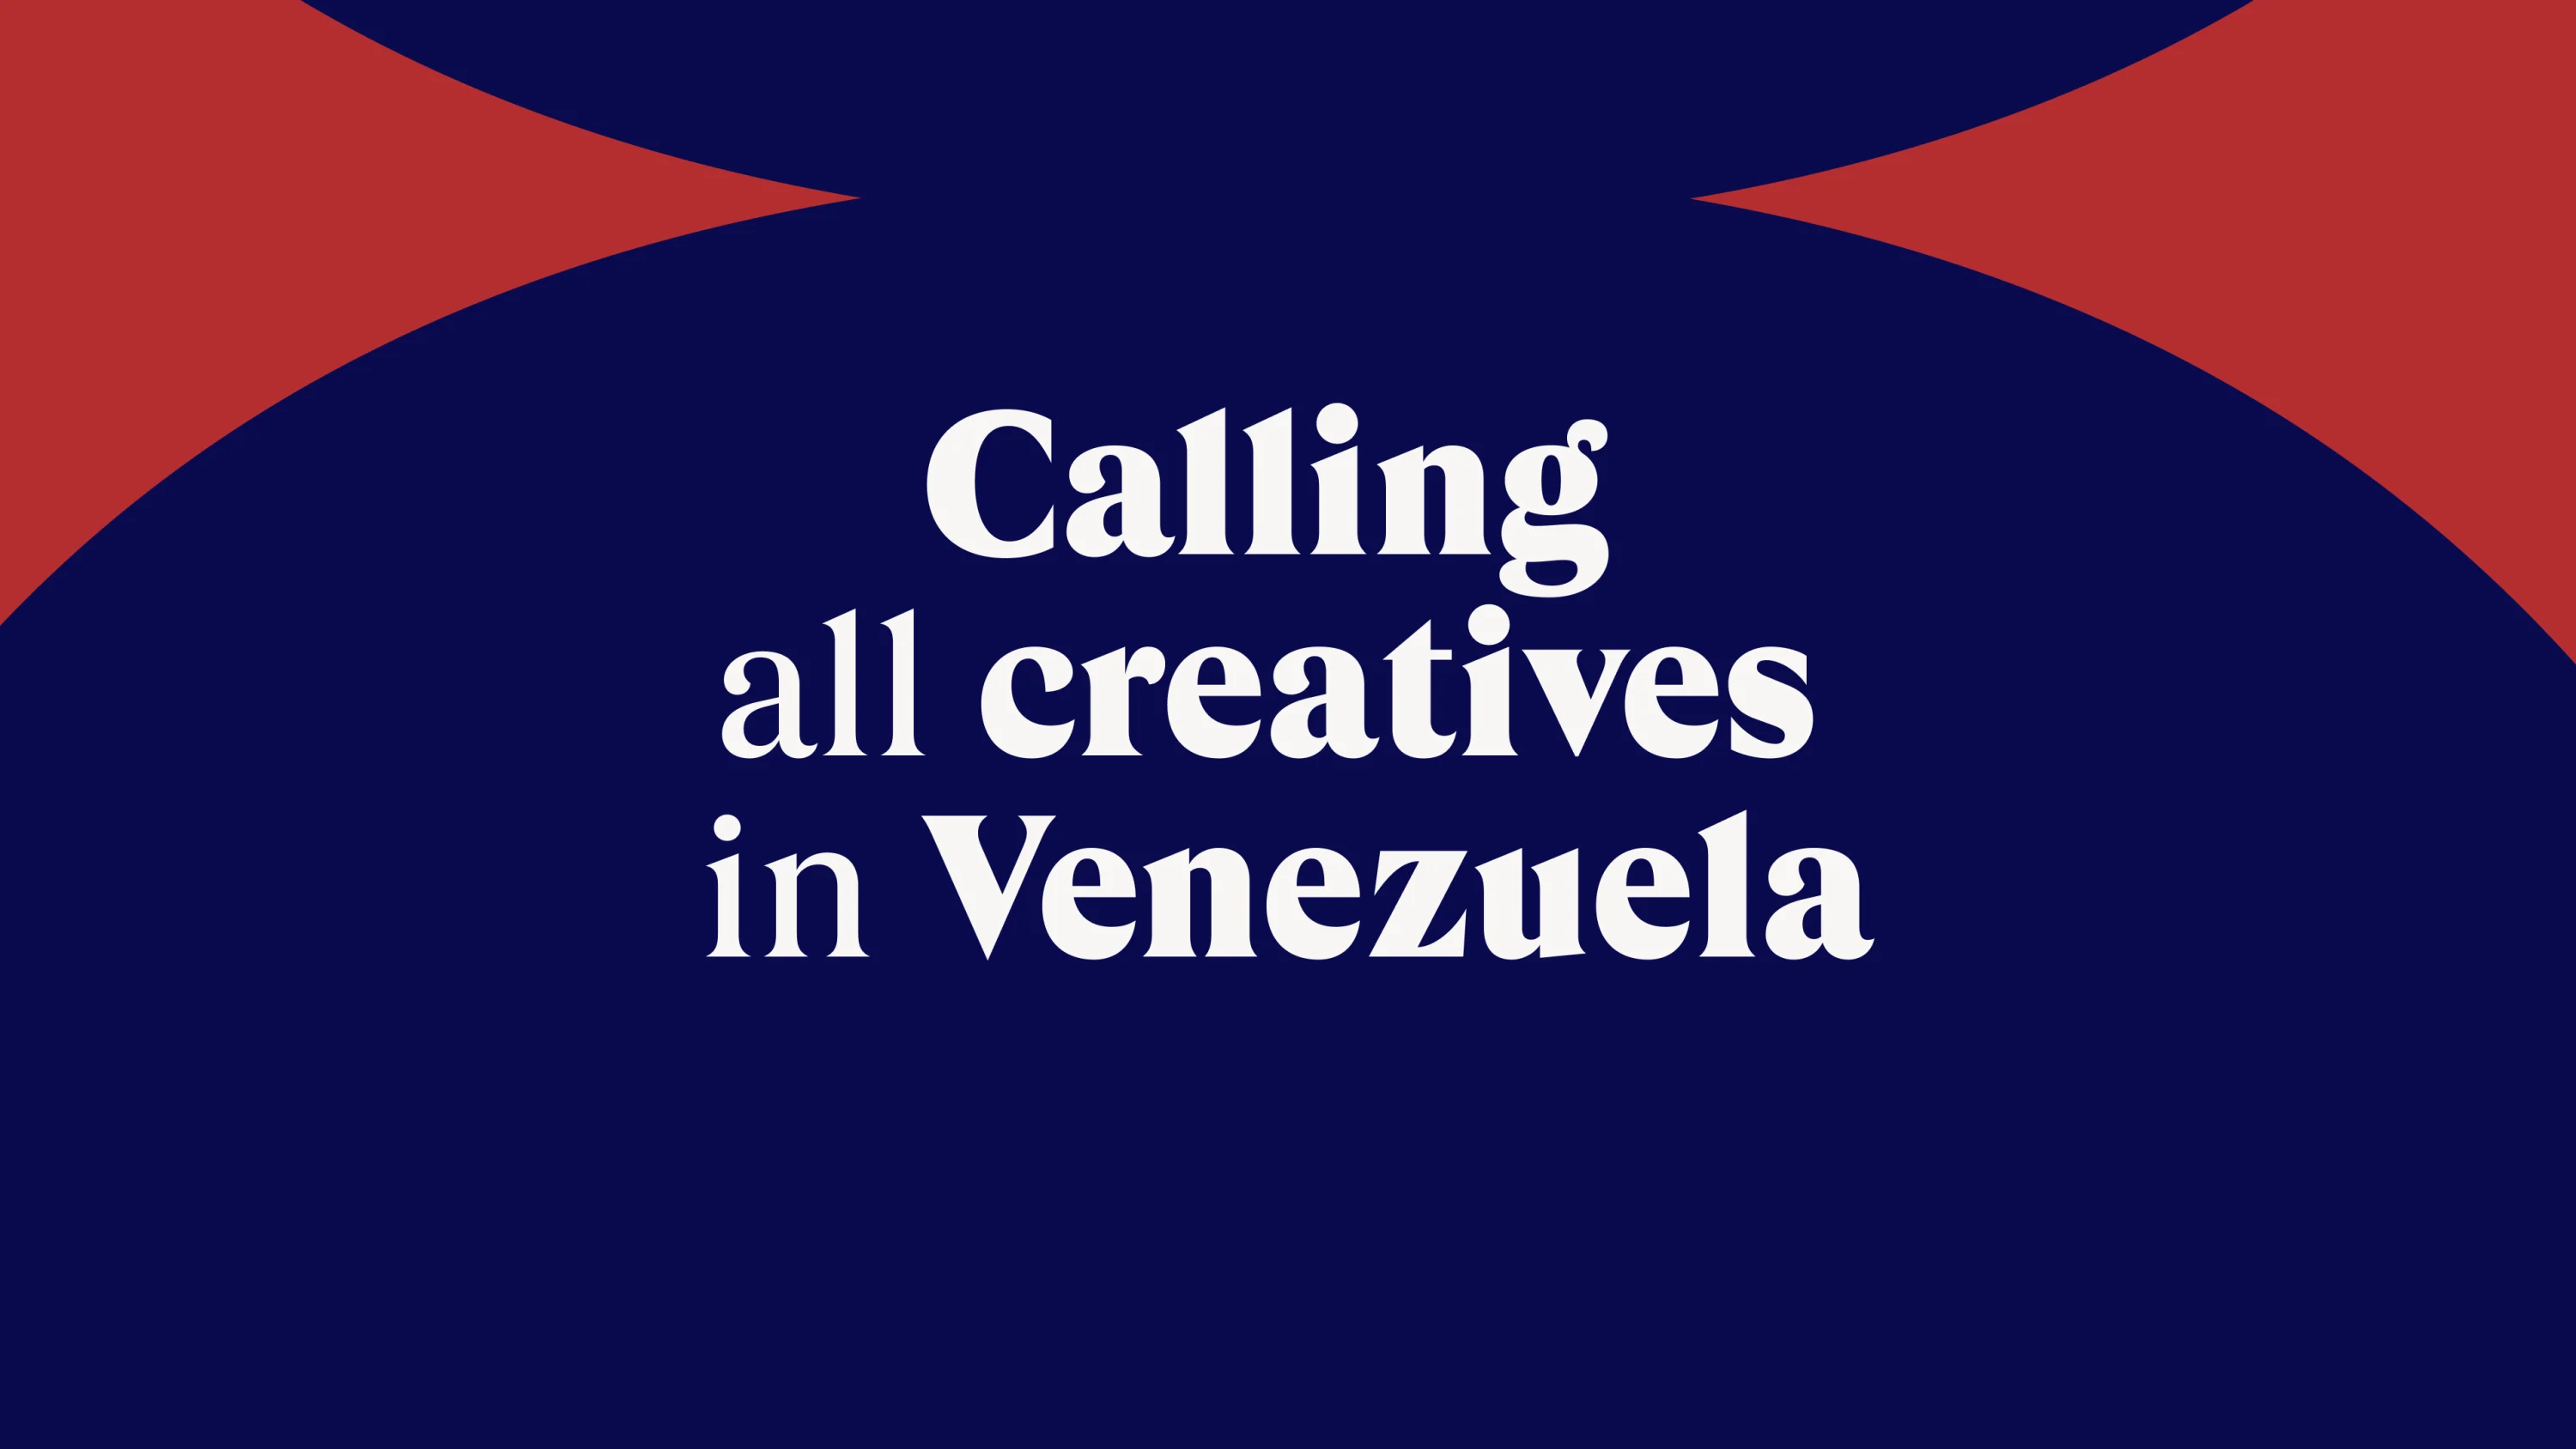 Cover Image - Calling all Venezuelan creatives